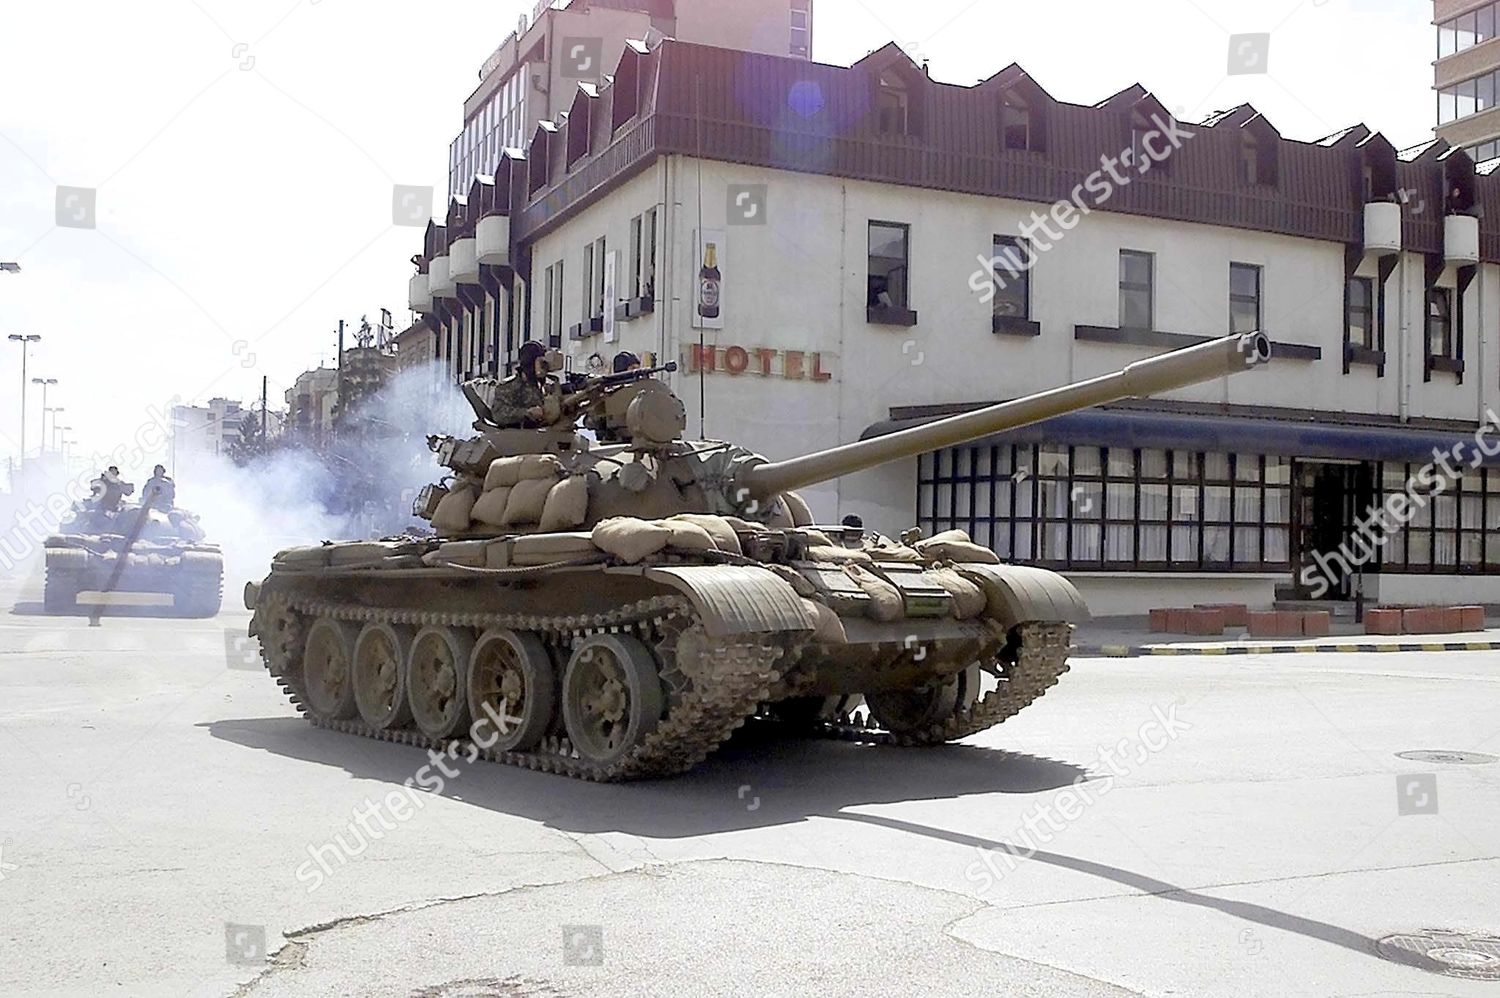 macedonia-conflict-tanks-mar-2001-shutterstock-editorial-8481678a.jpg